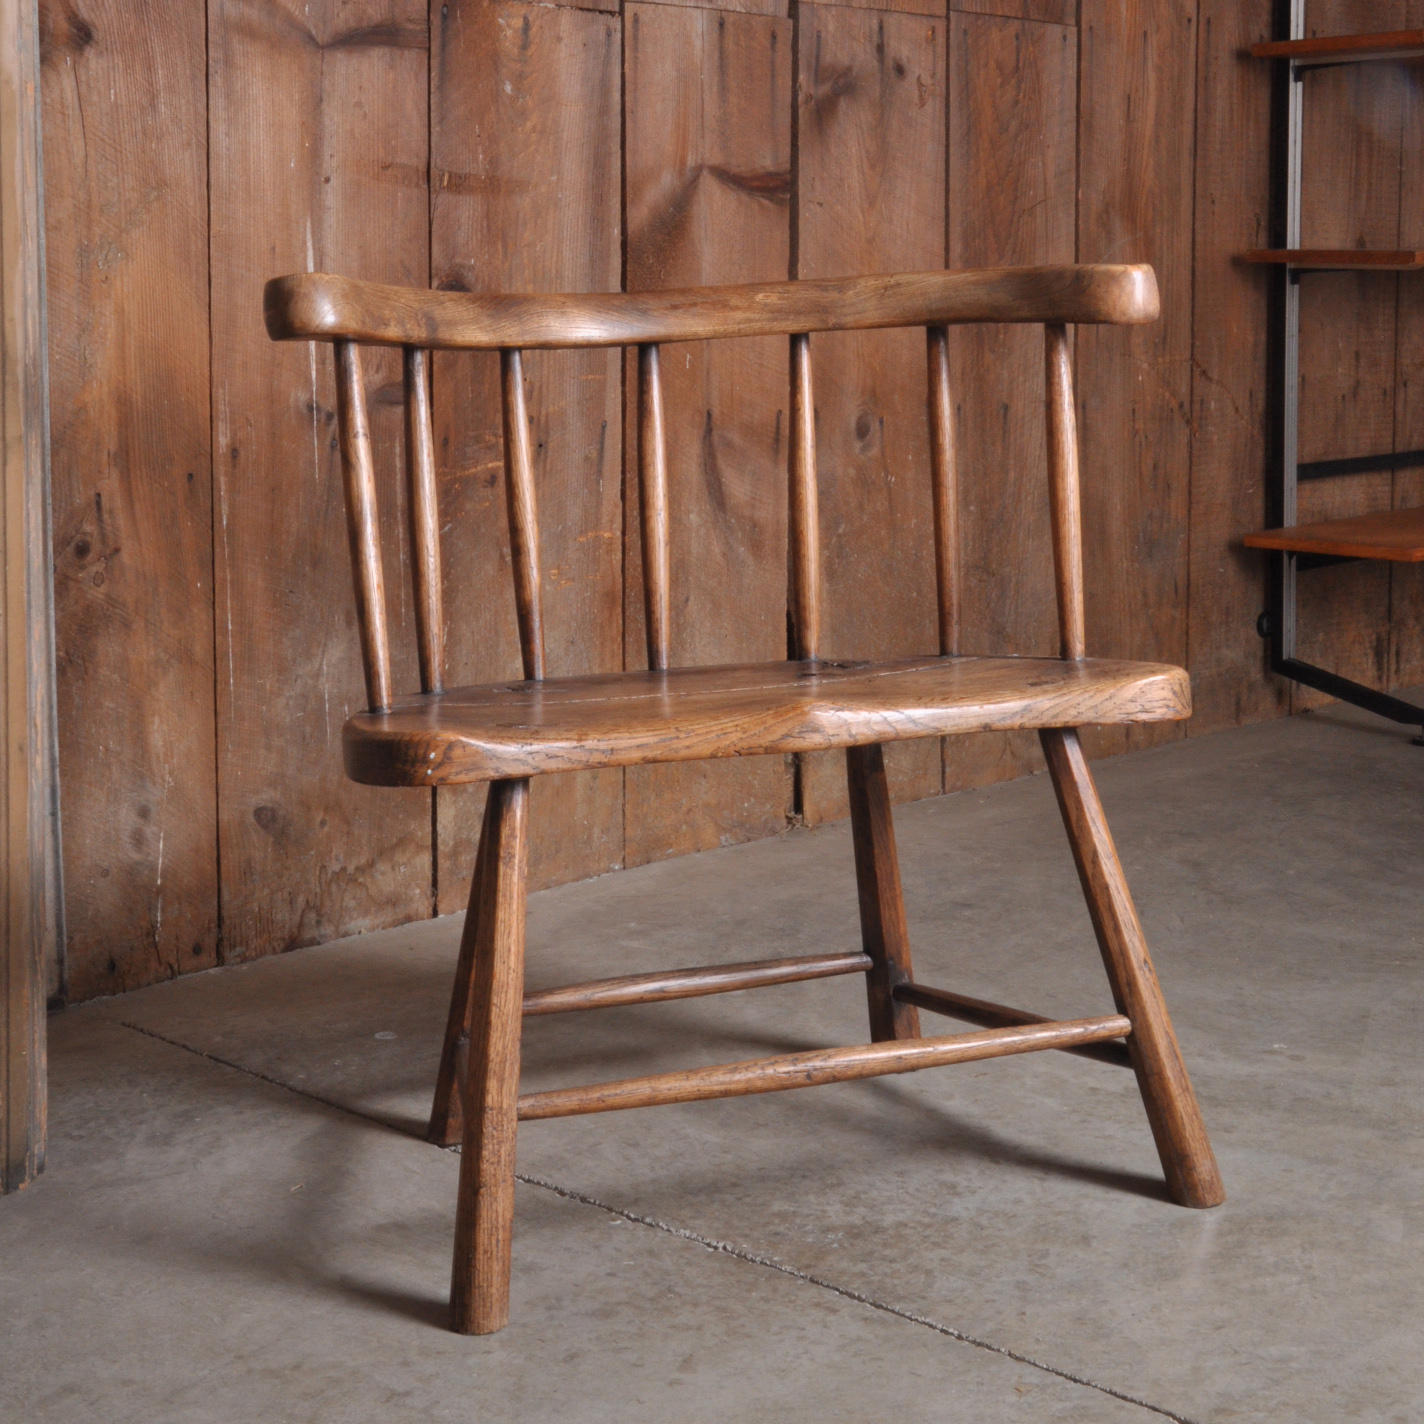 Vernacular Windsor Style Chair Image